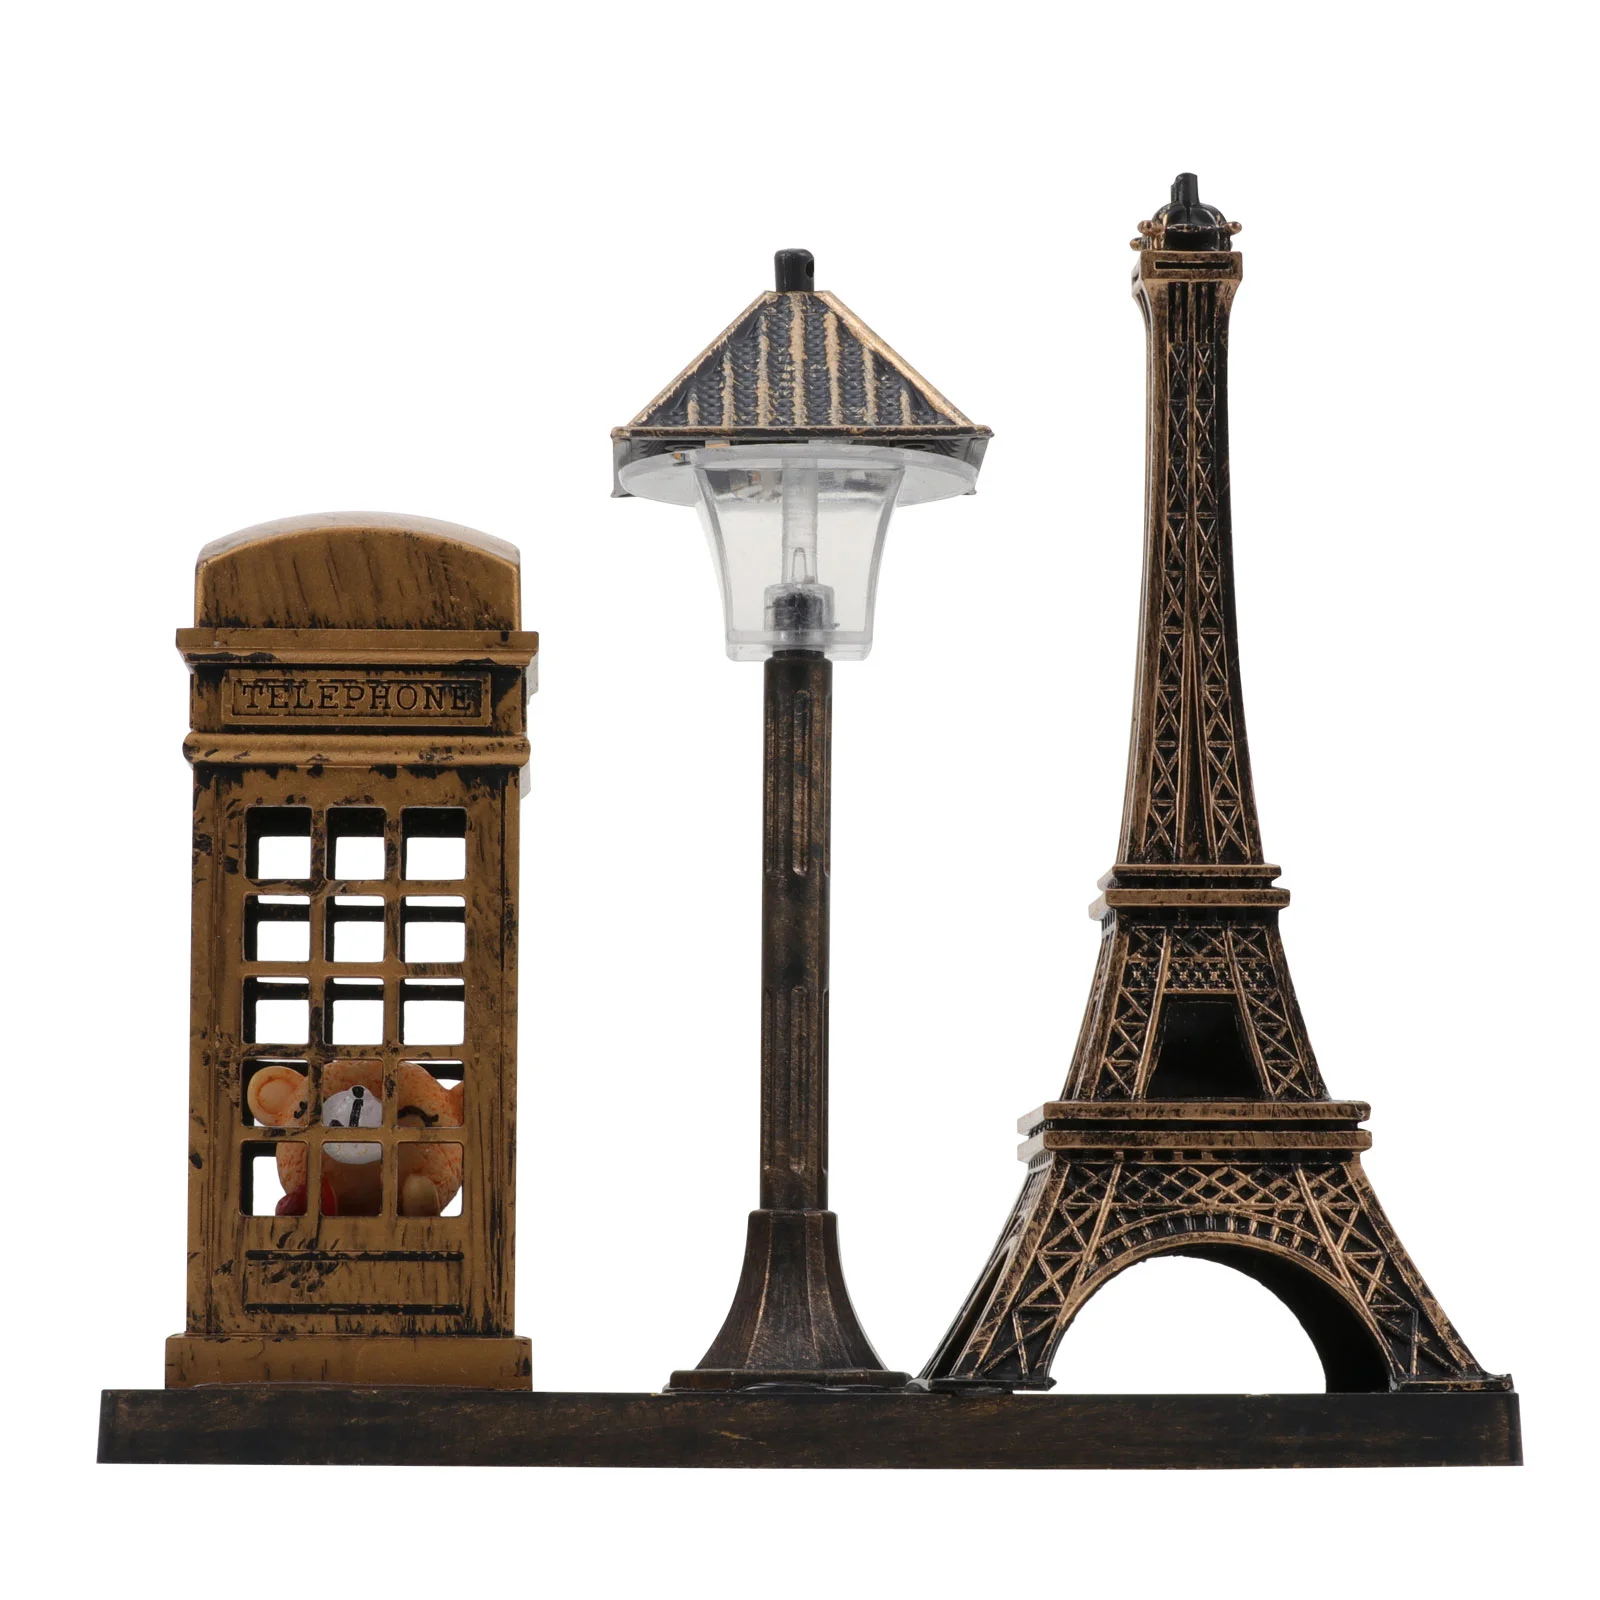 

Eiffel Tower Night Light Paris Eiffel Tower Ornament Vintage Desk Lamp Mini Post Light Telephone Booth Craft Art Statue Model